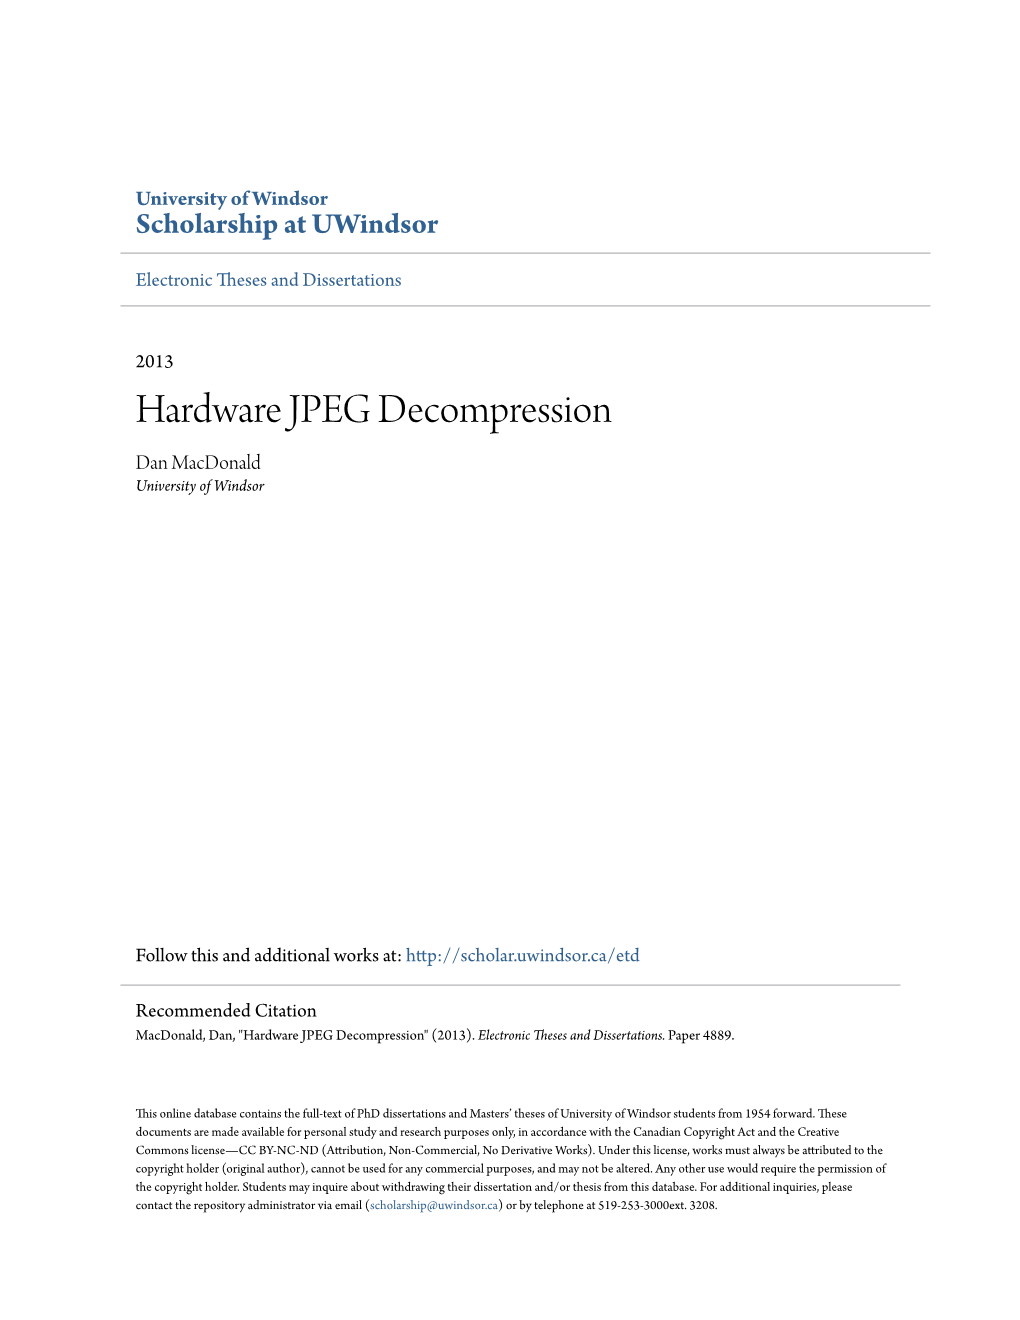 Hardware JPEG Decompression Dan Macdonald University of Windsor